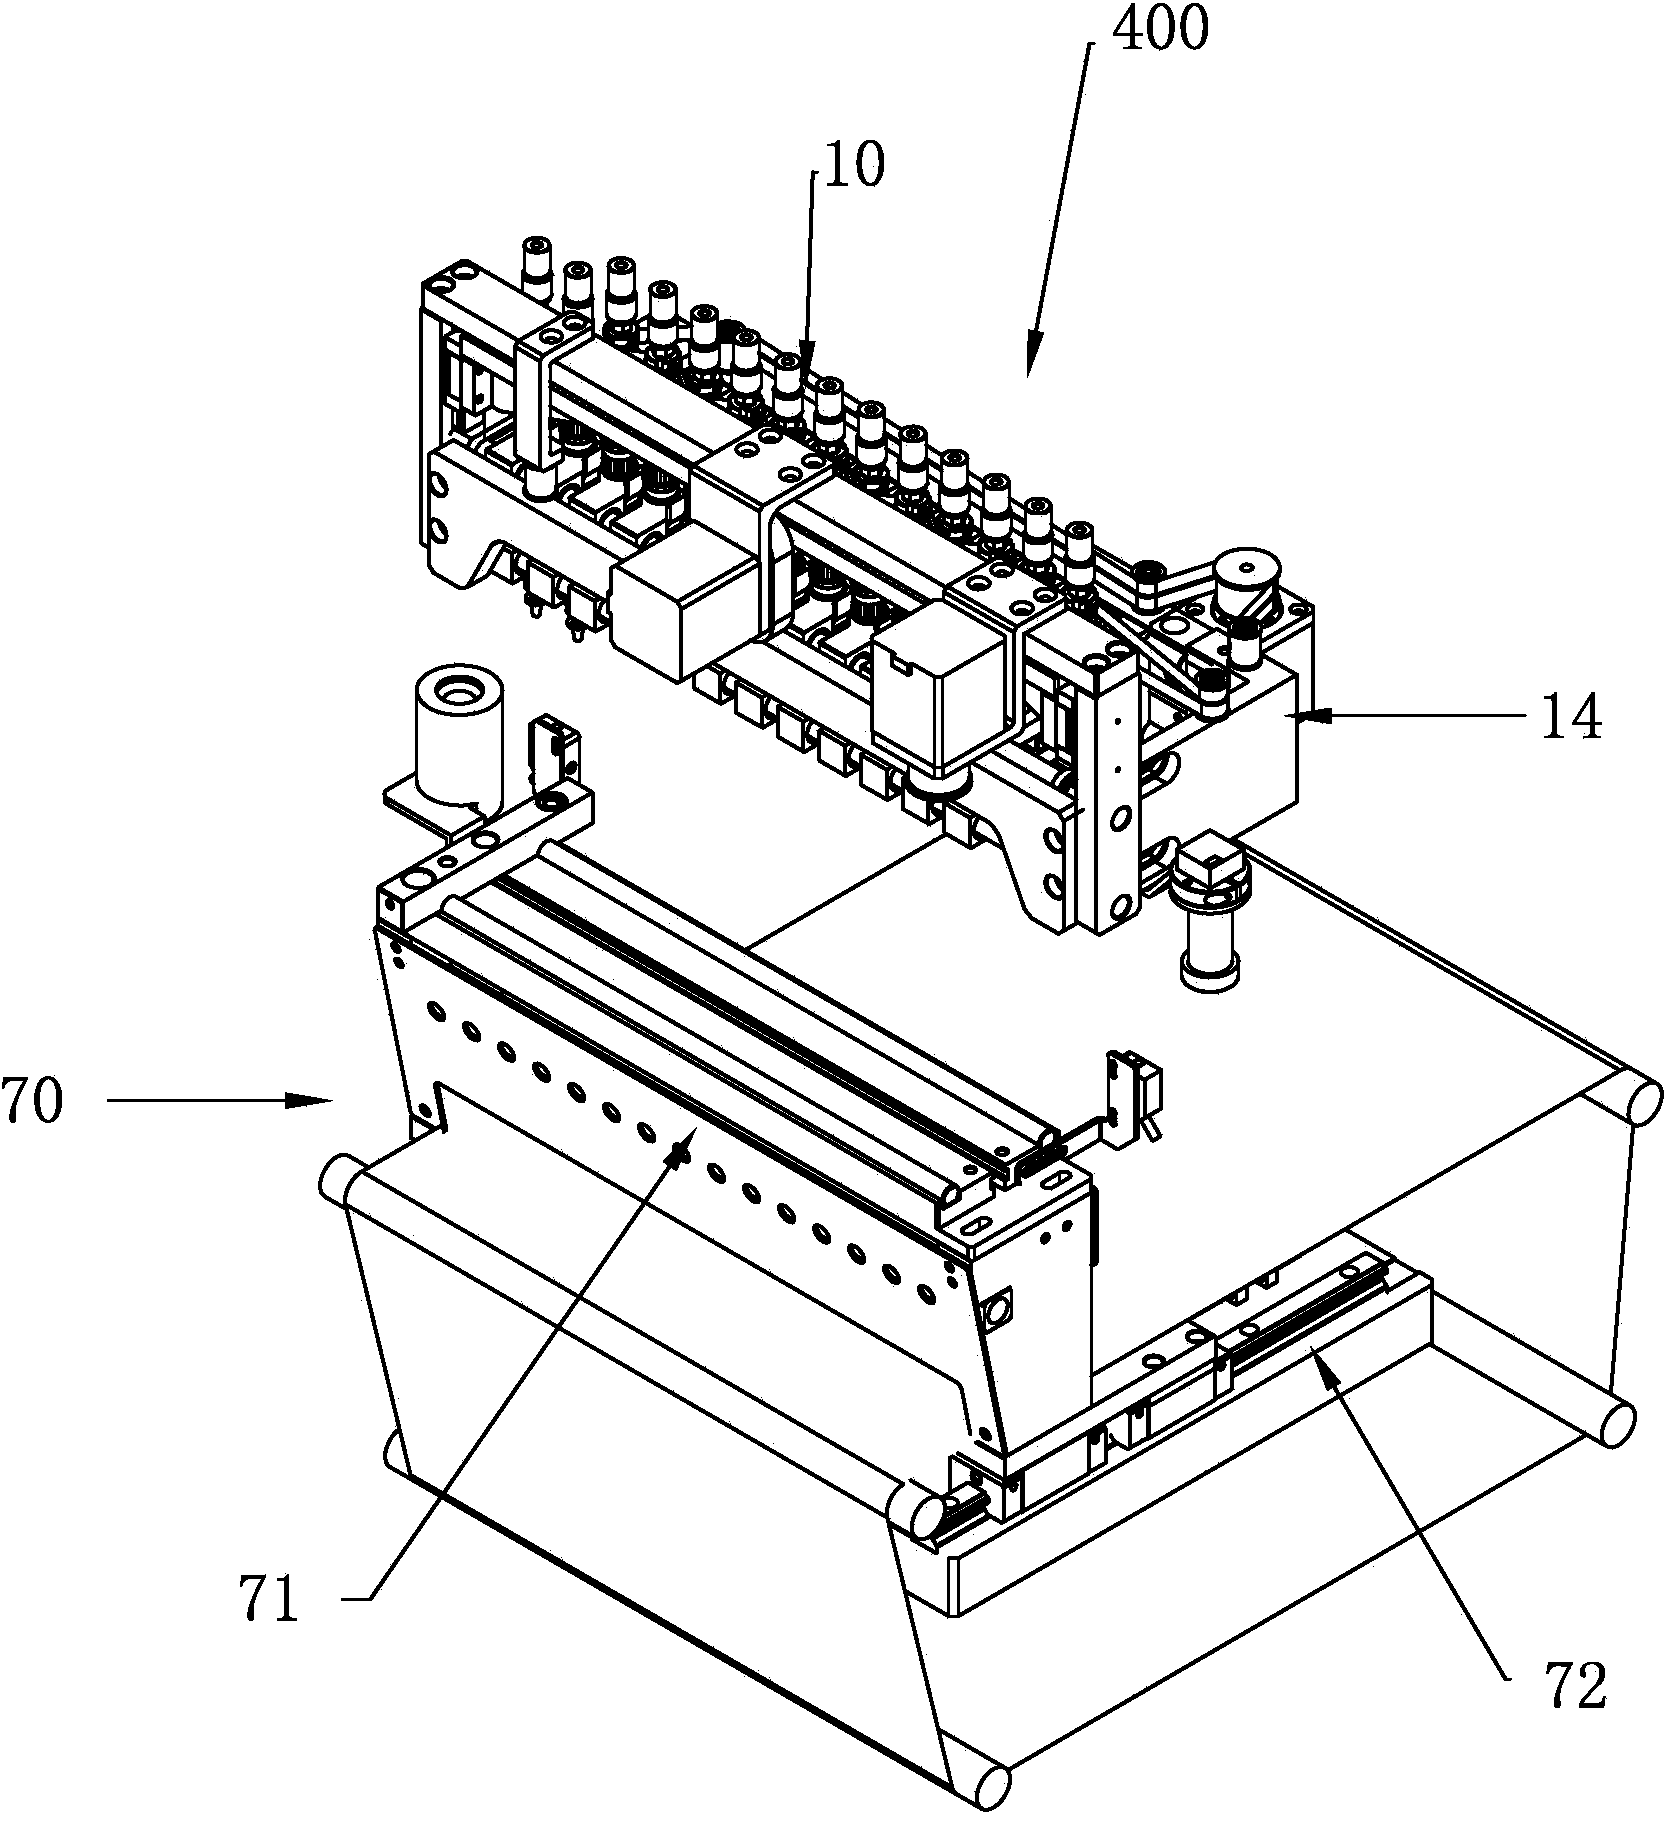 Matrix-type surface mounted device